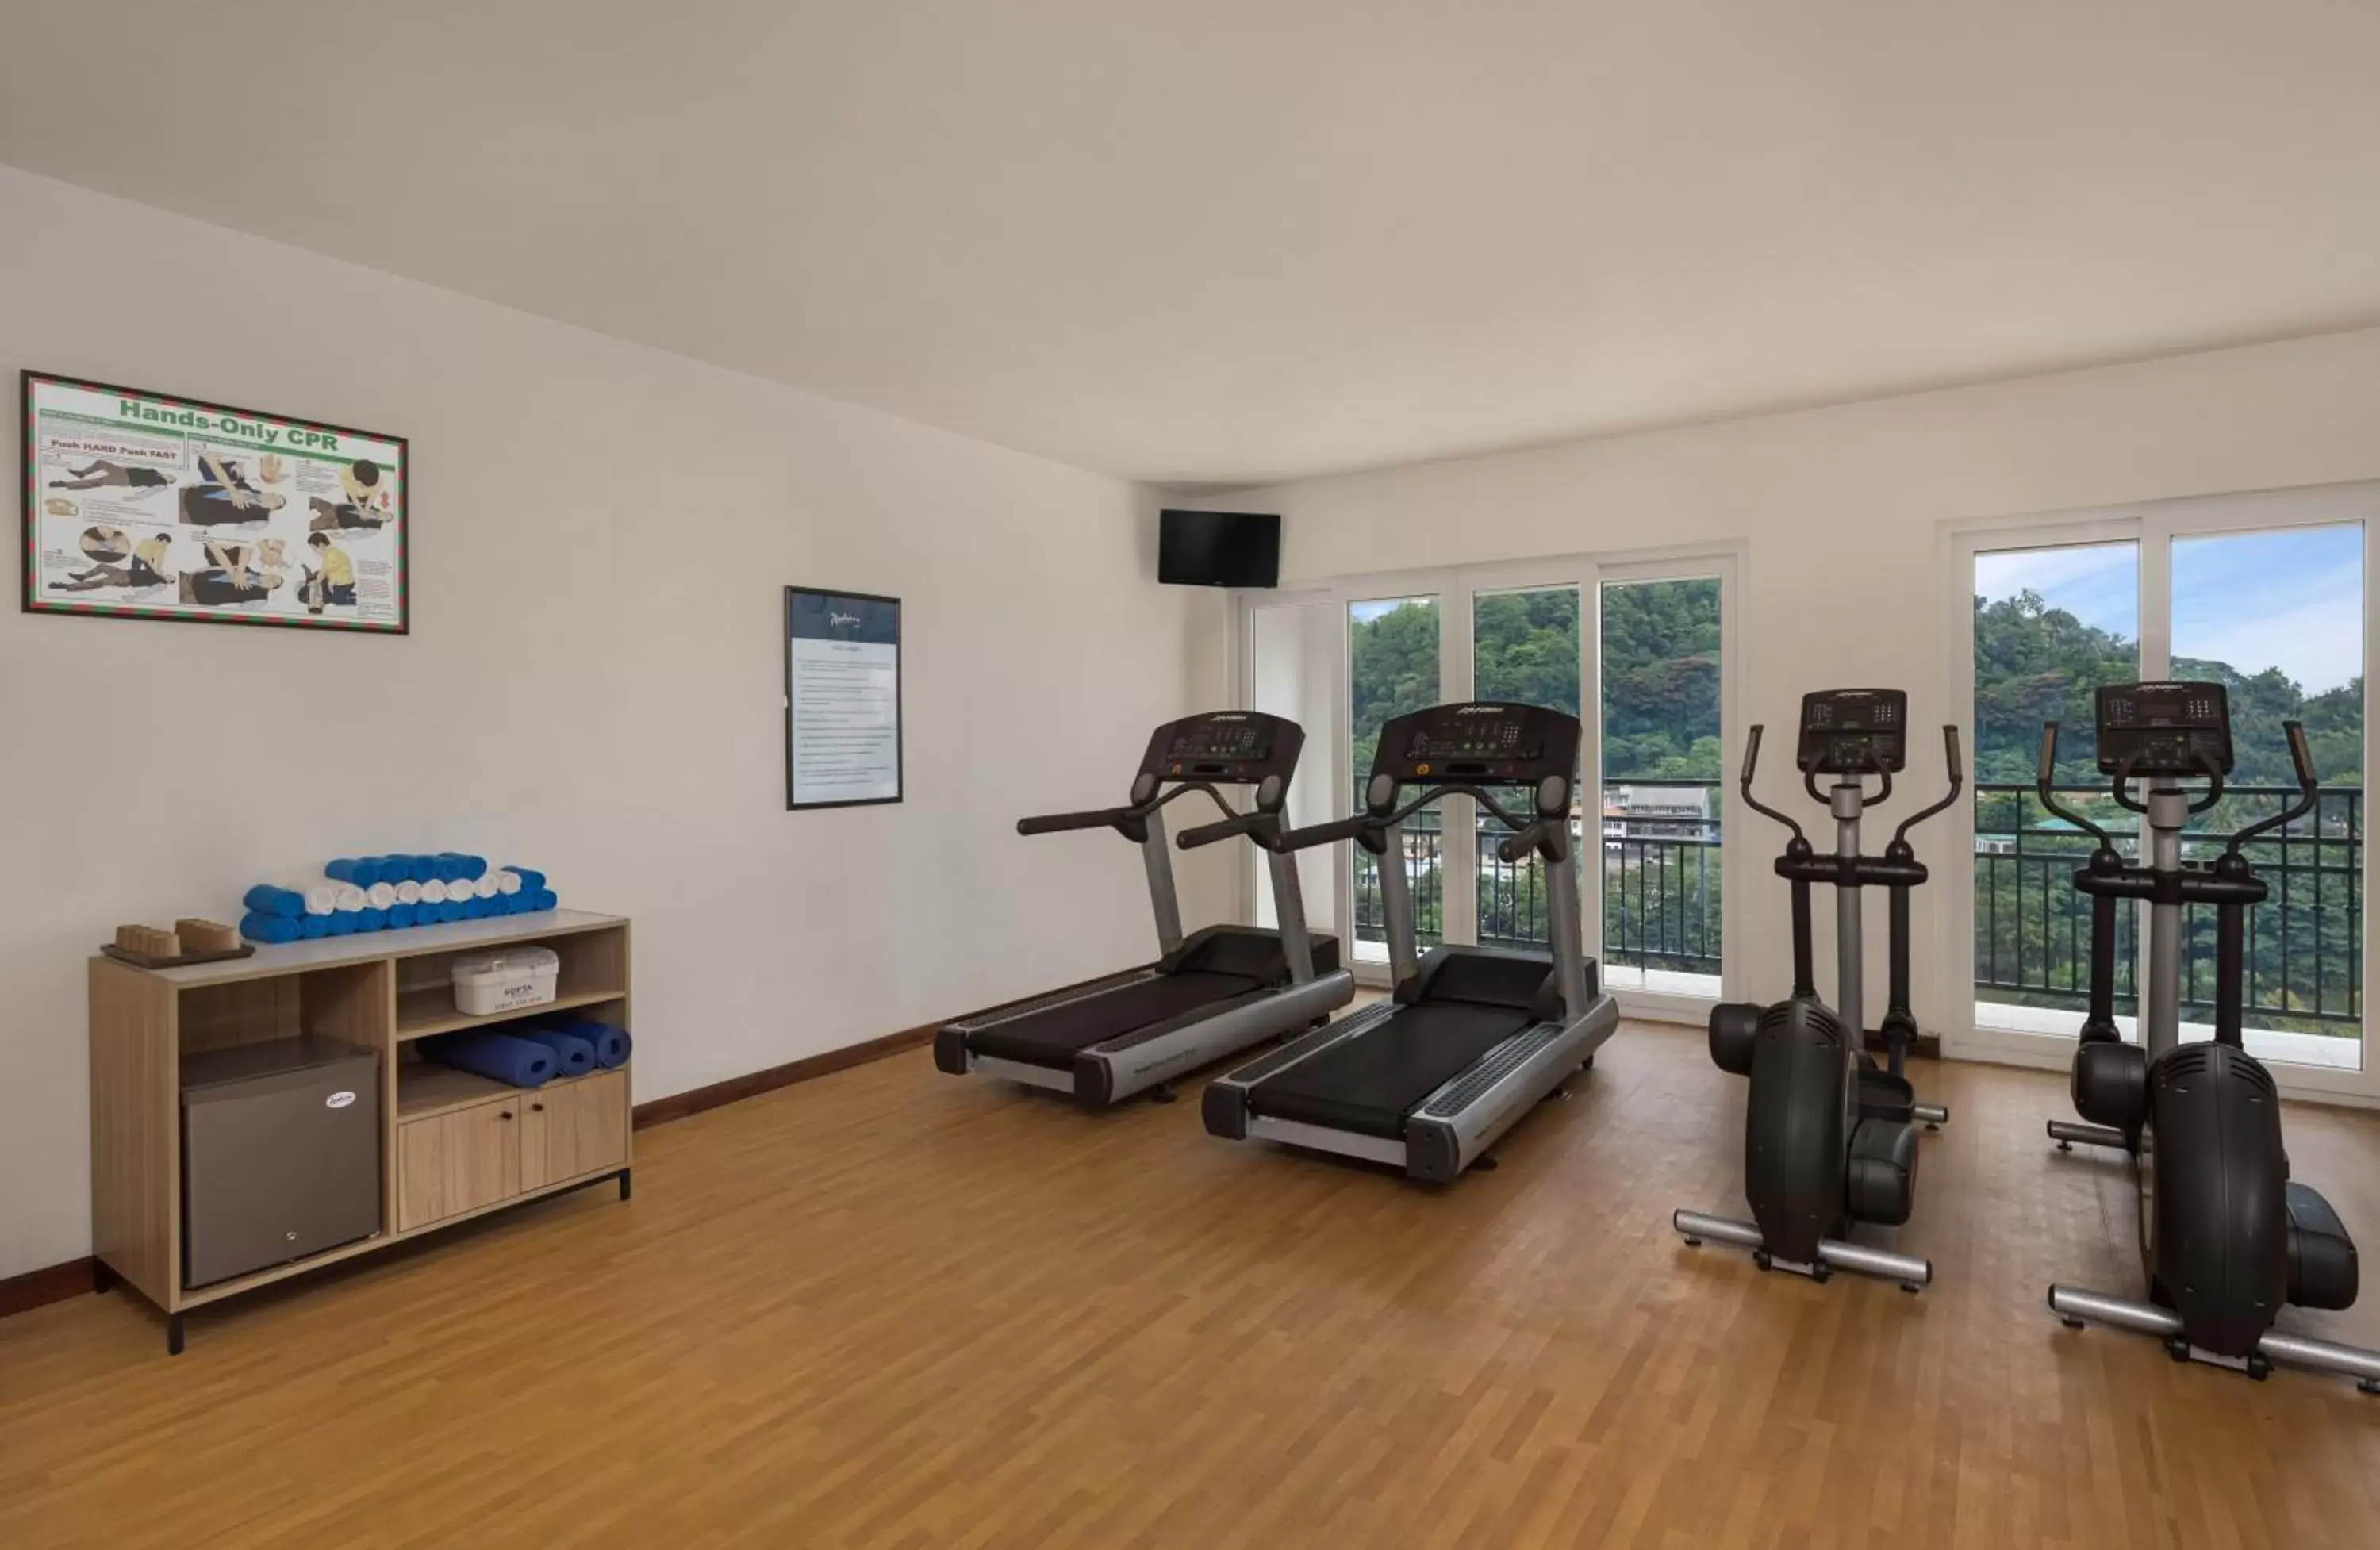 Fitness centre/facilities, Fitness Center/Facilities in Radisson Hotel Kandy